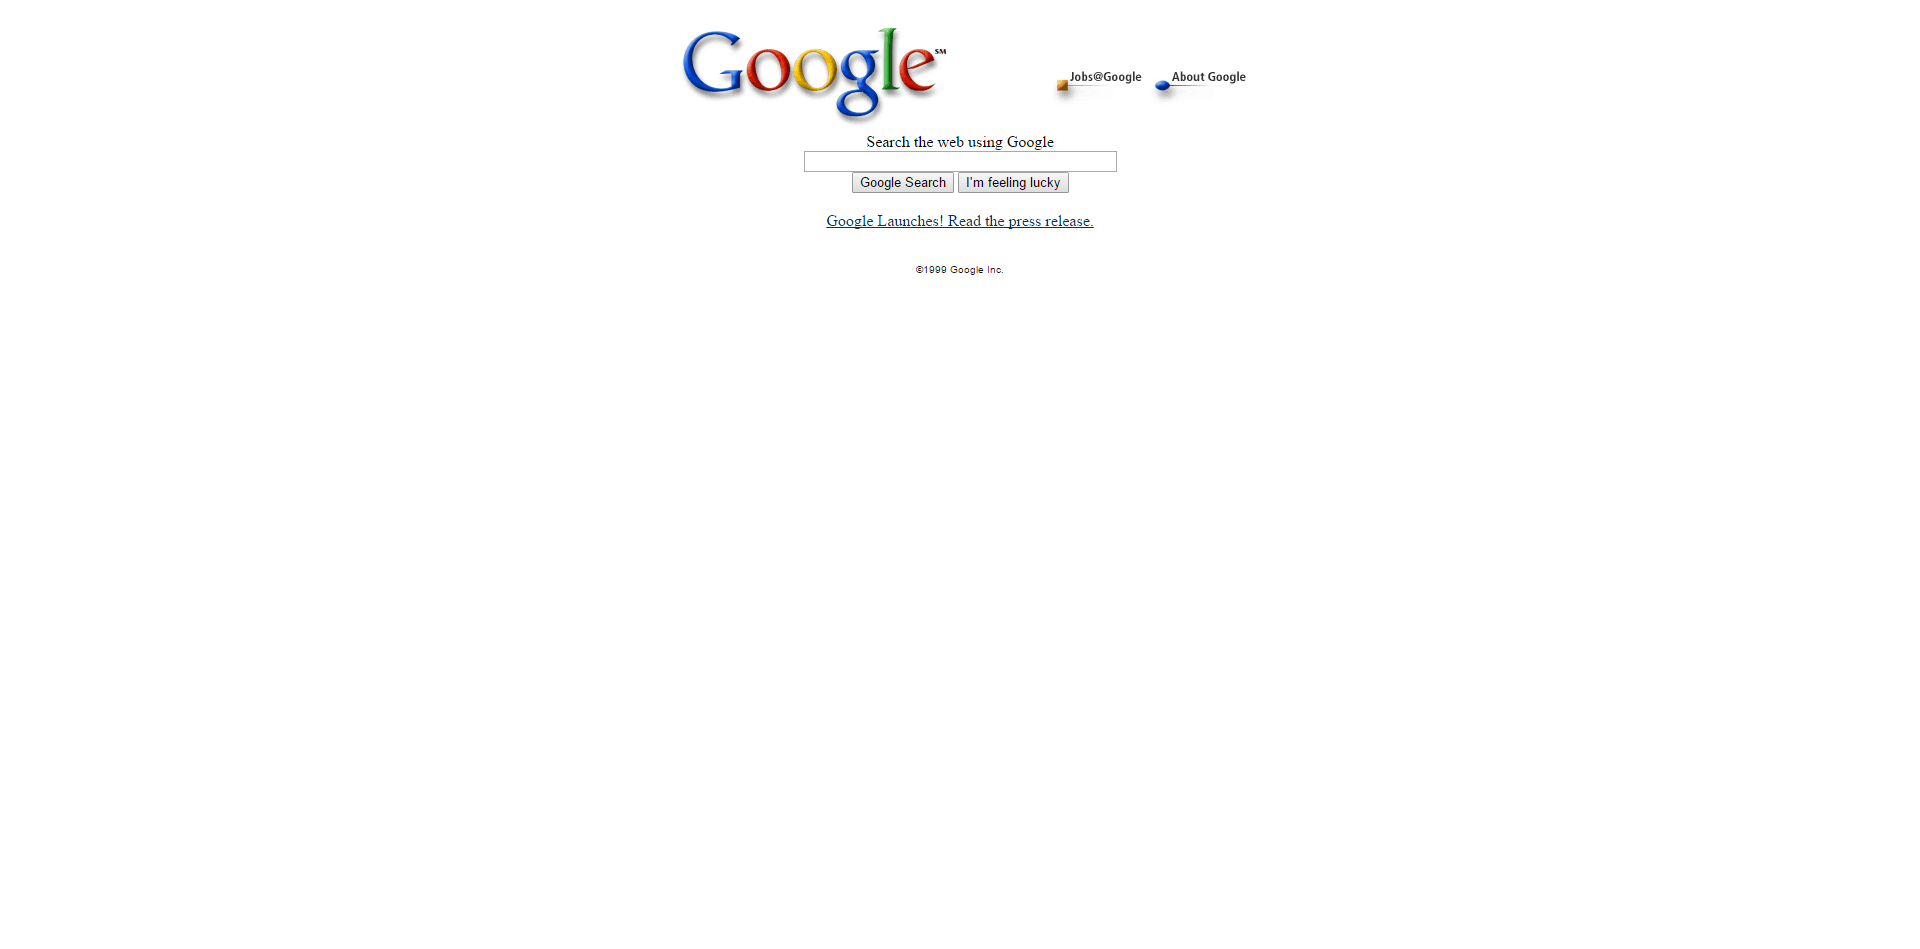 Google homepage 12 October 1999 different weird post.